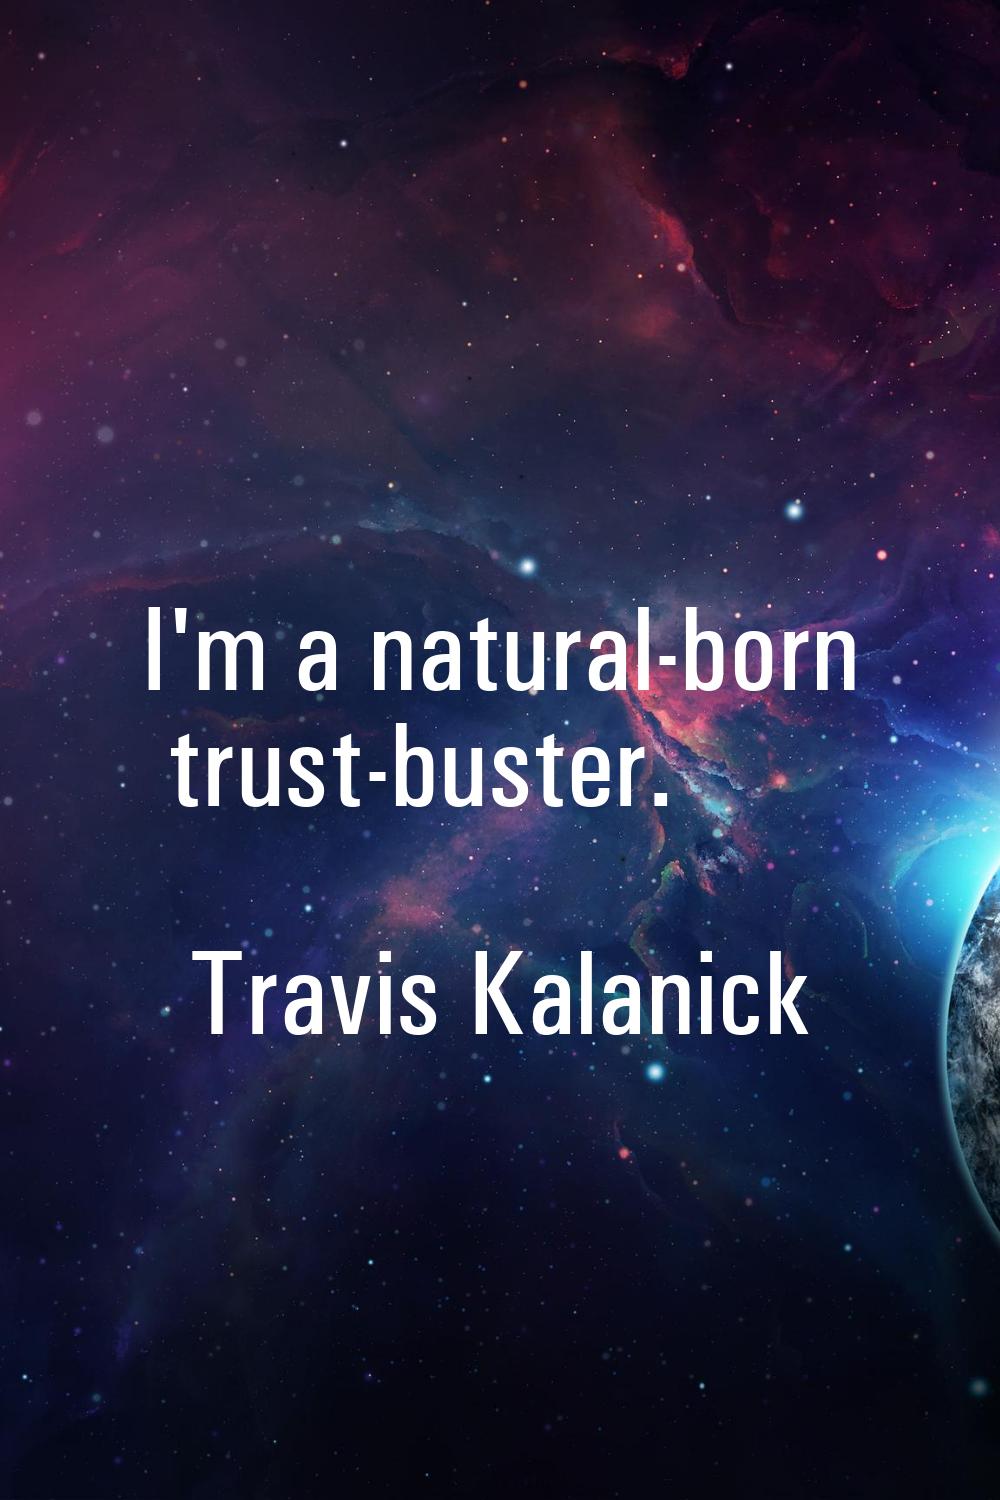 I'm a natural-born trust-buster.